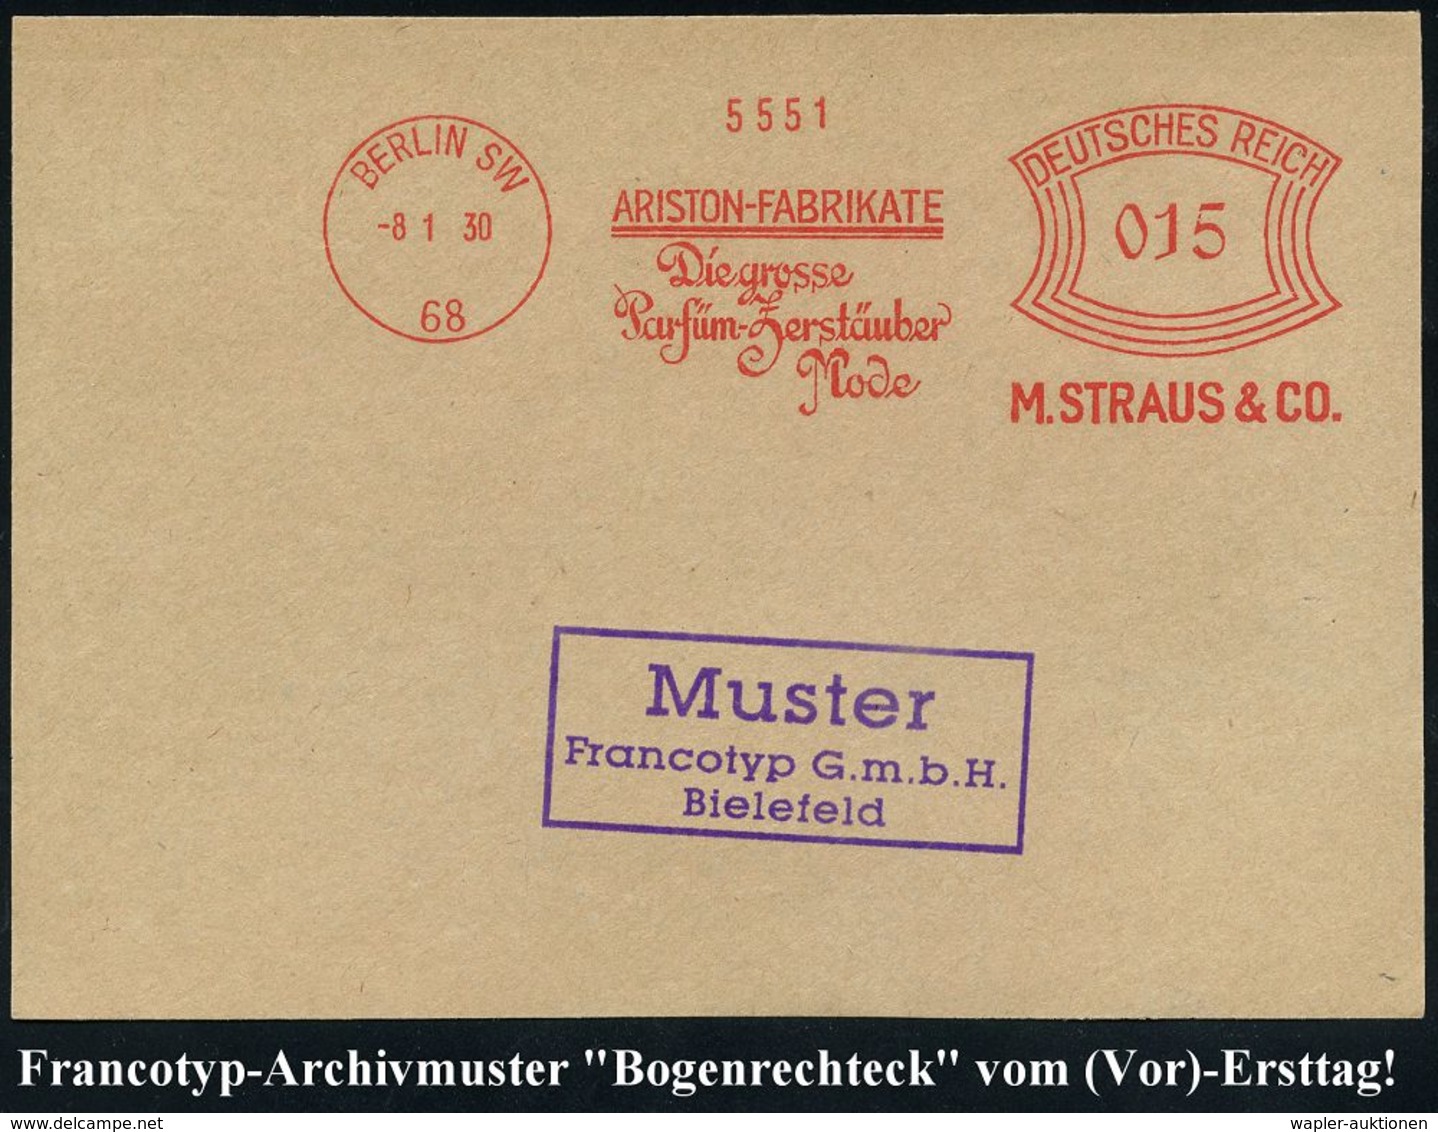 KOSMETIK / PARFÜM : BERLIN SW/ 68/ ARISTON-FABRIKATE/ ..Parfüm-Zerstäuber../ M.STRAUS & CO 1930 (8.1.) AFS, Francotyp-Ar - Pharmazie